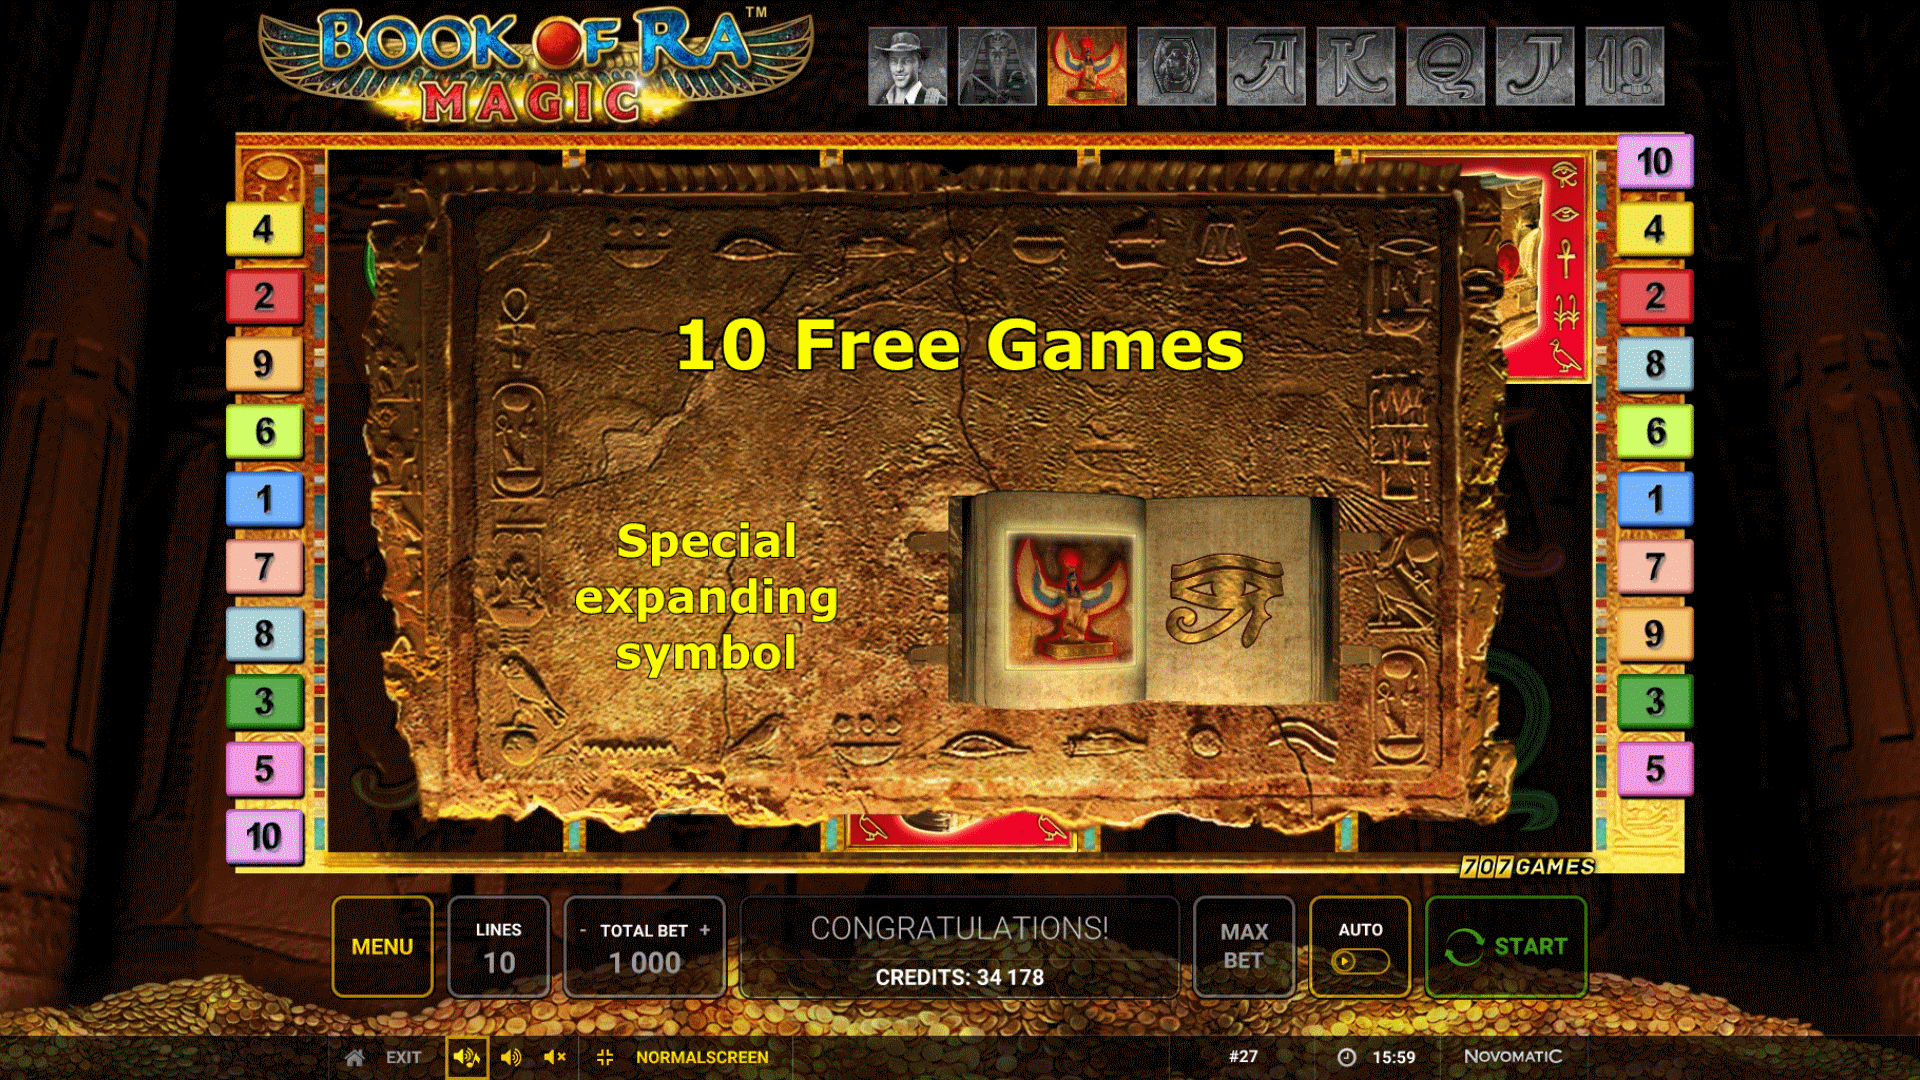 Book of Ra Magic slot machine play now